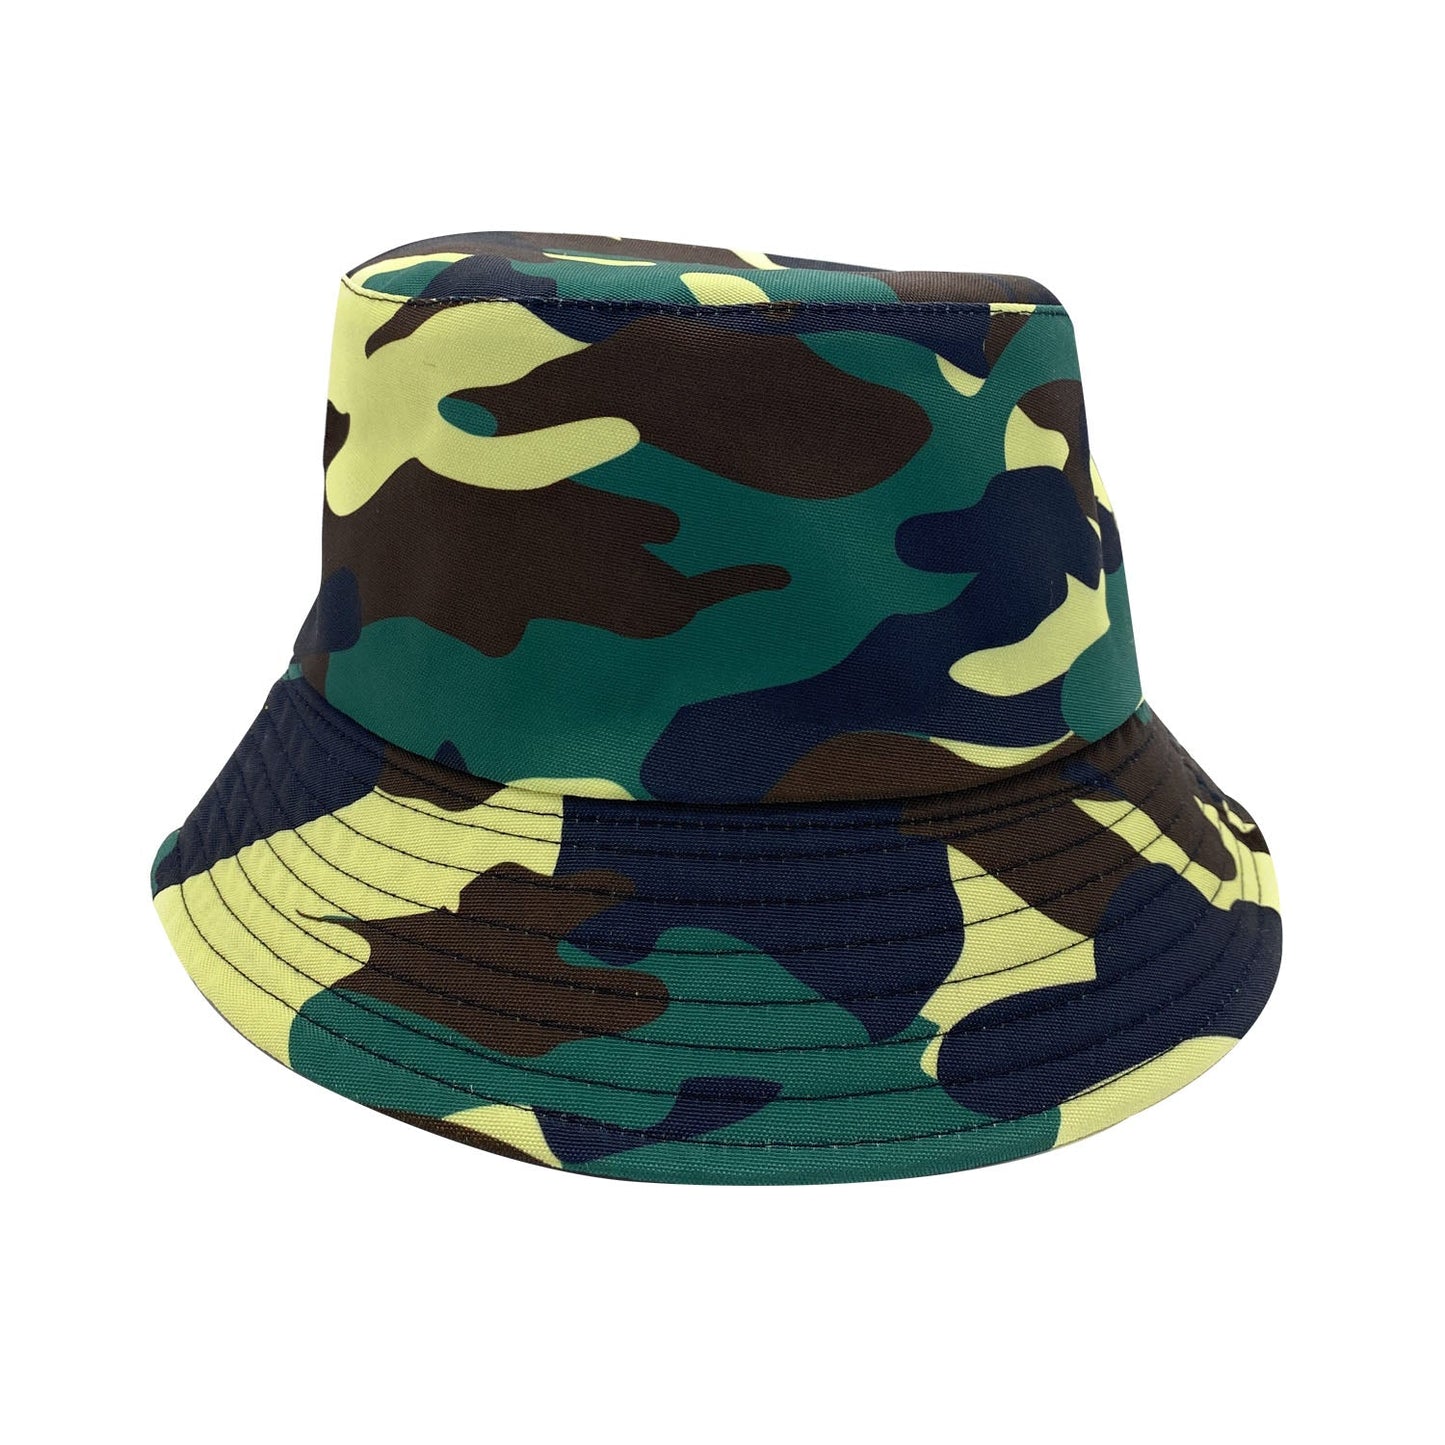 Empire Cove Camo Camouflage Print Bucket Hat Reversible Military Fisherman Cap